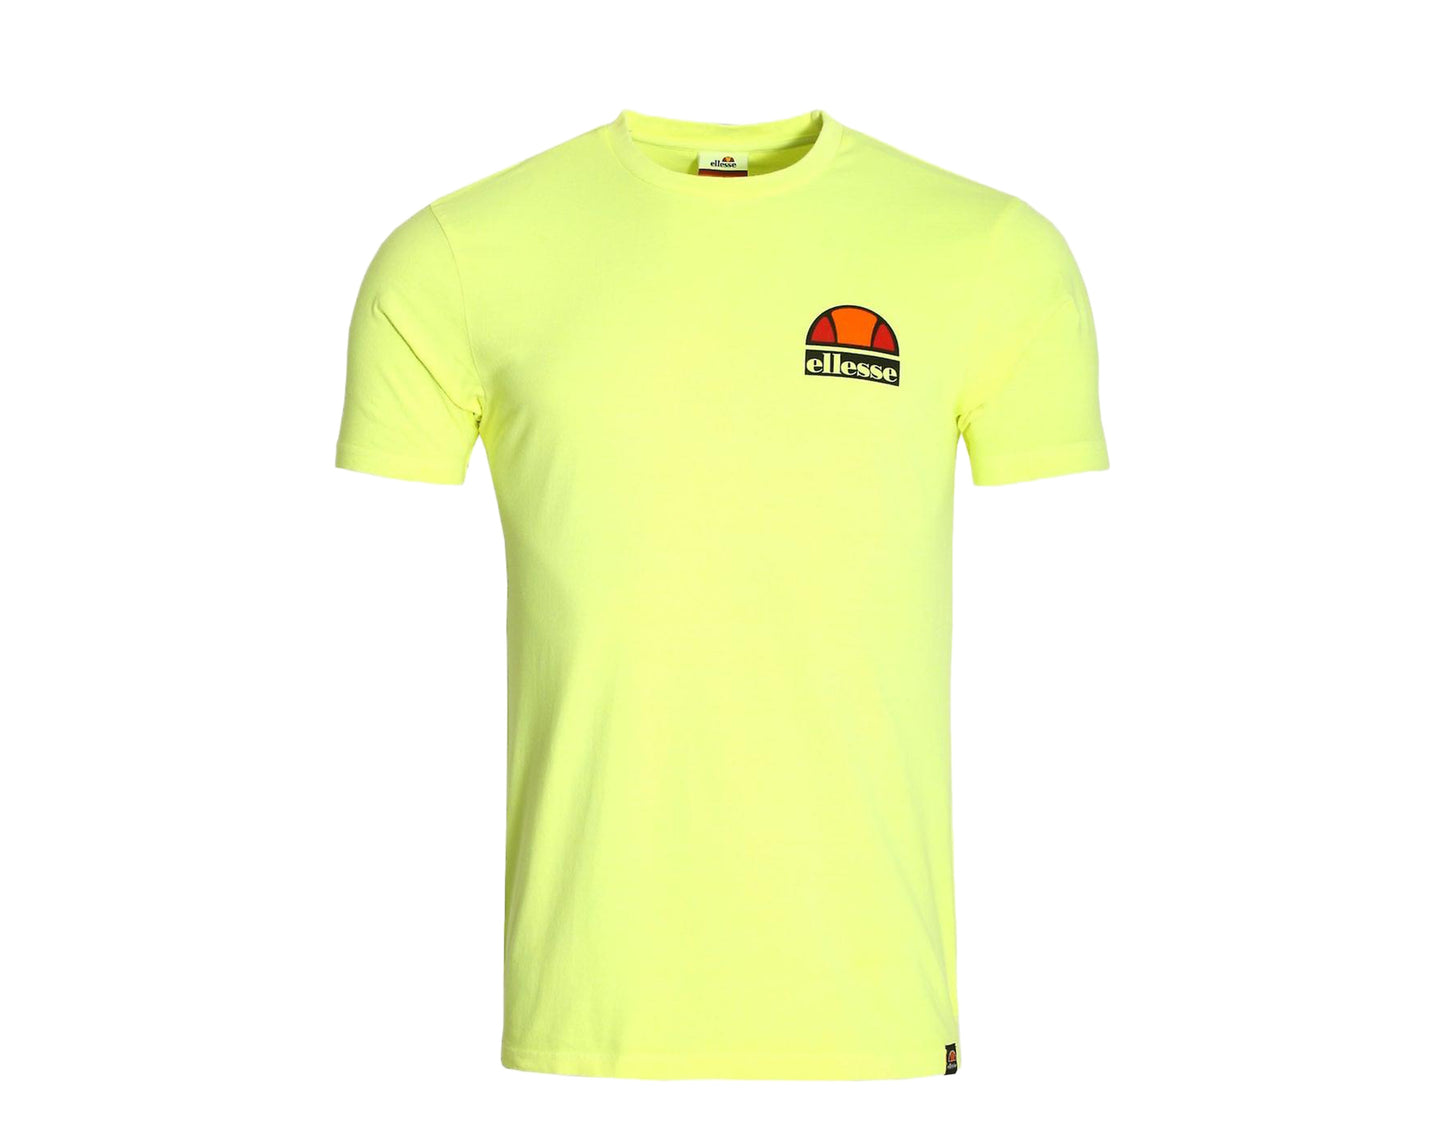 Ellesse Cuba Neon Yellow Men's T-Shirt SHB06831-799